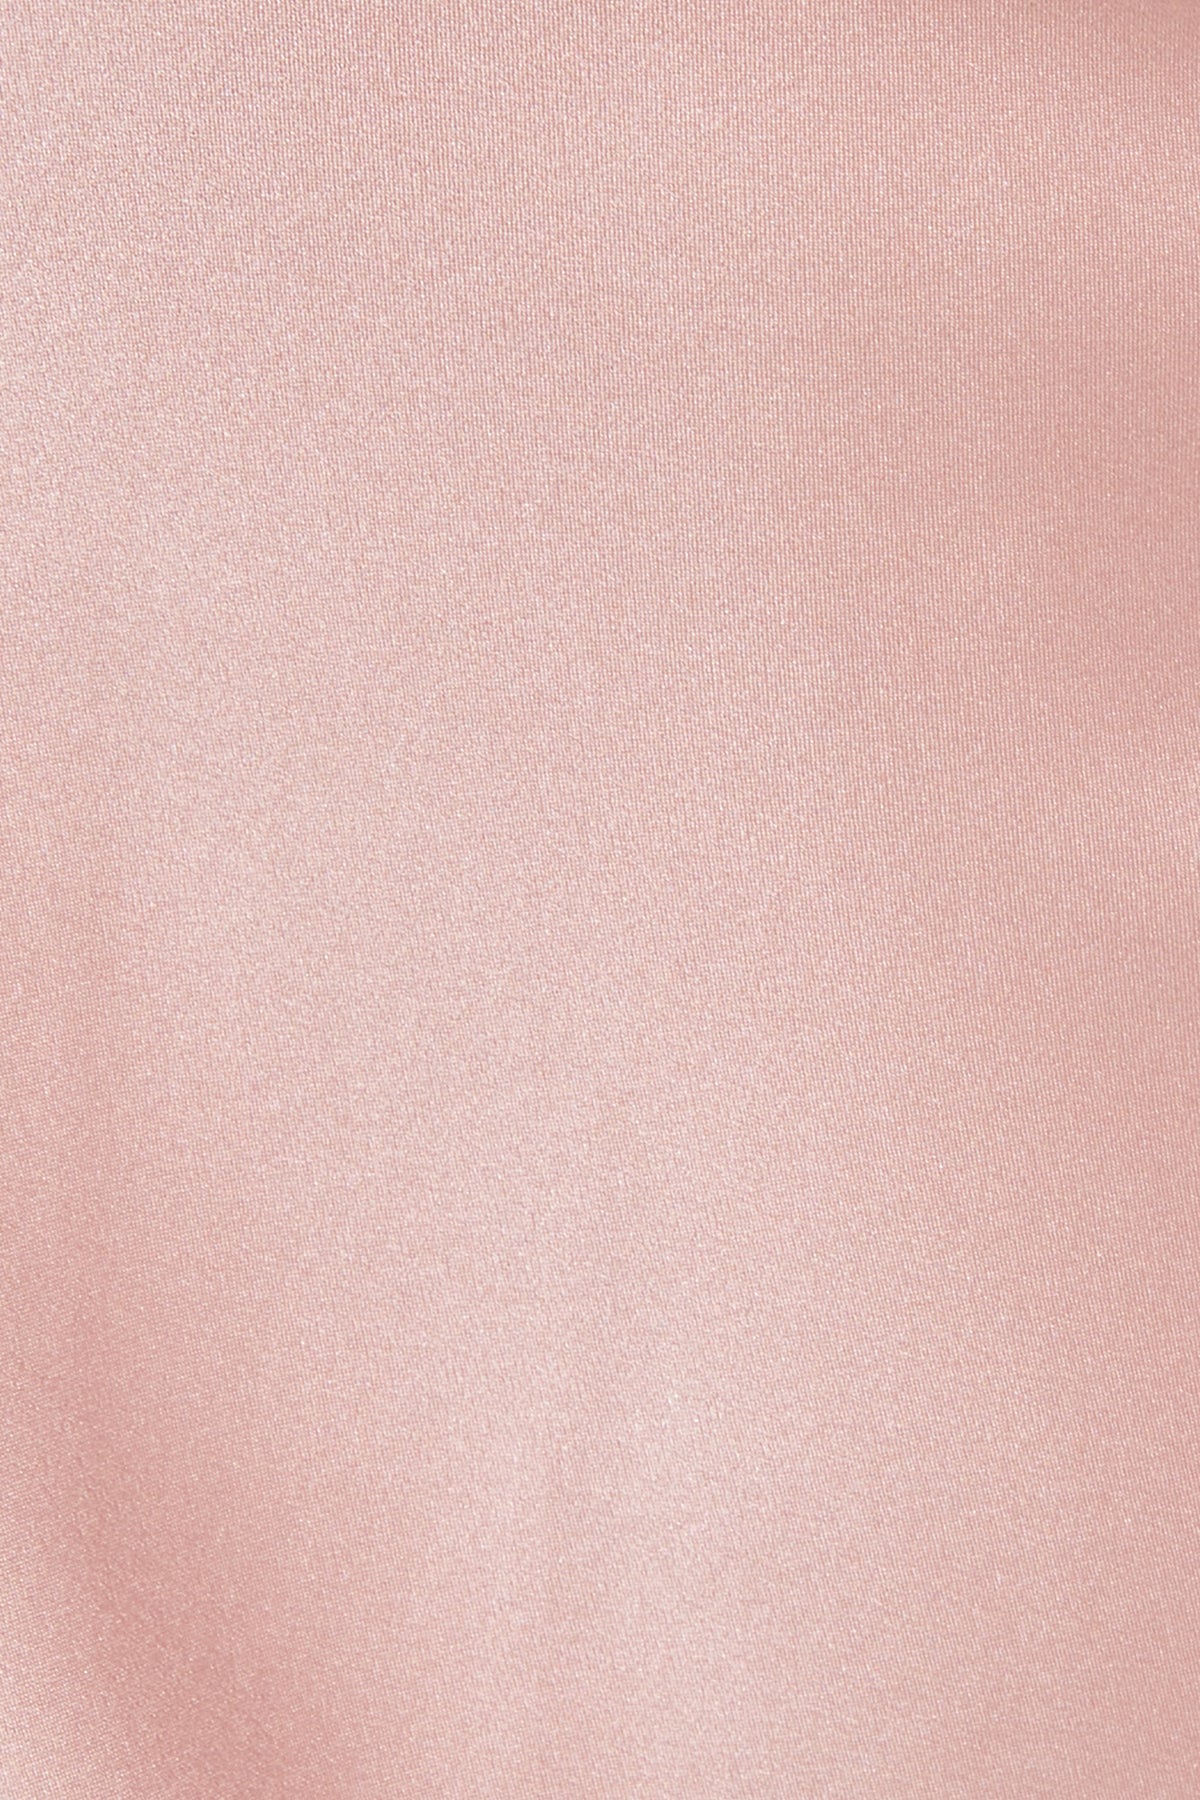 GINIA Lace Silk Lace Slip in Bridal Rose - 100% 19mm Silk Grade 6A